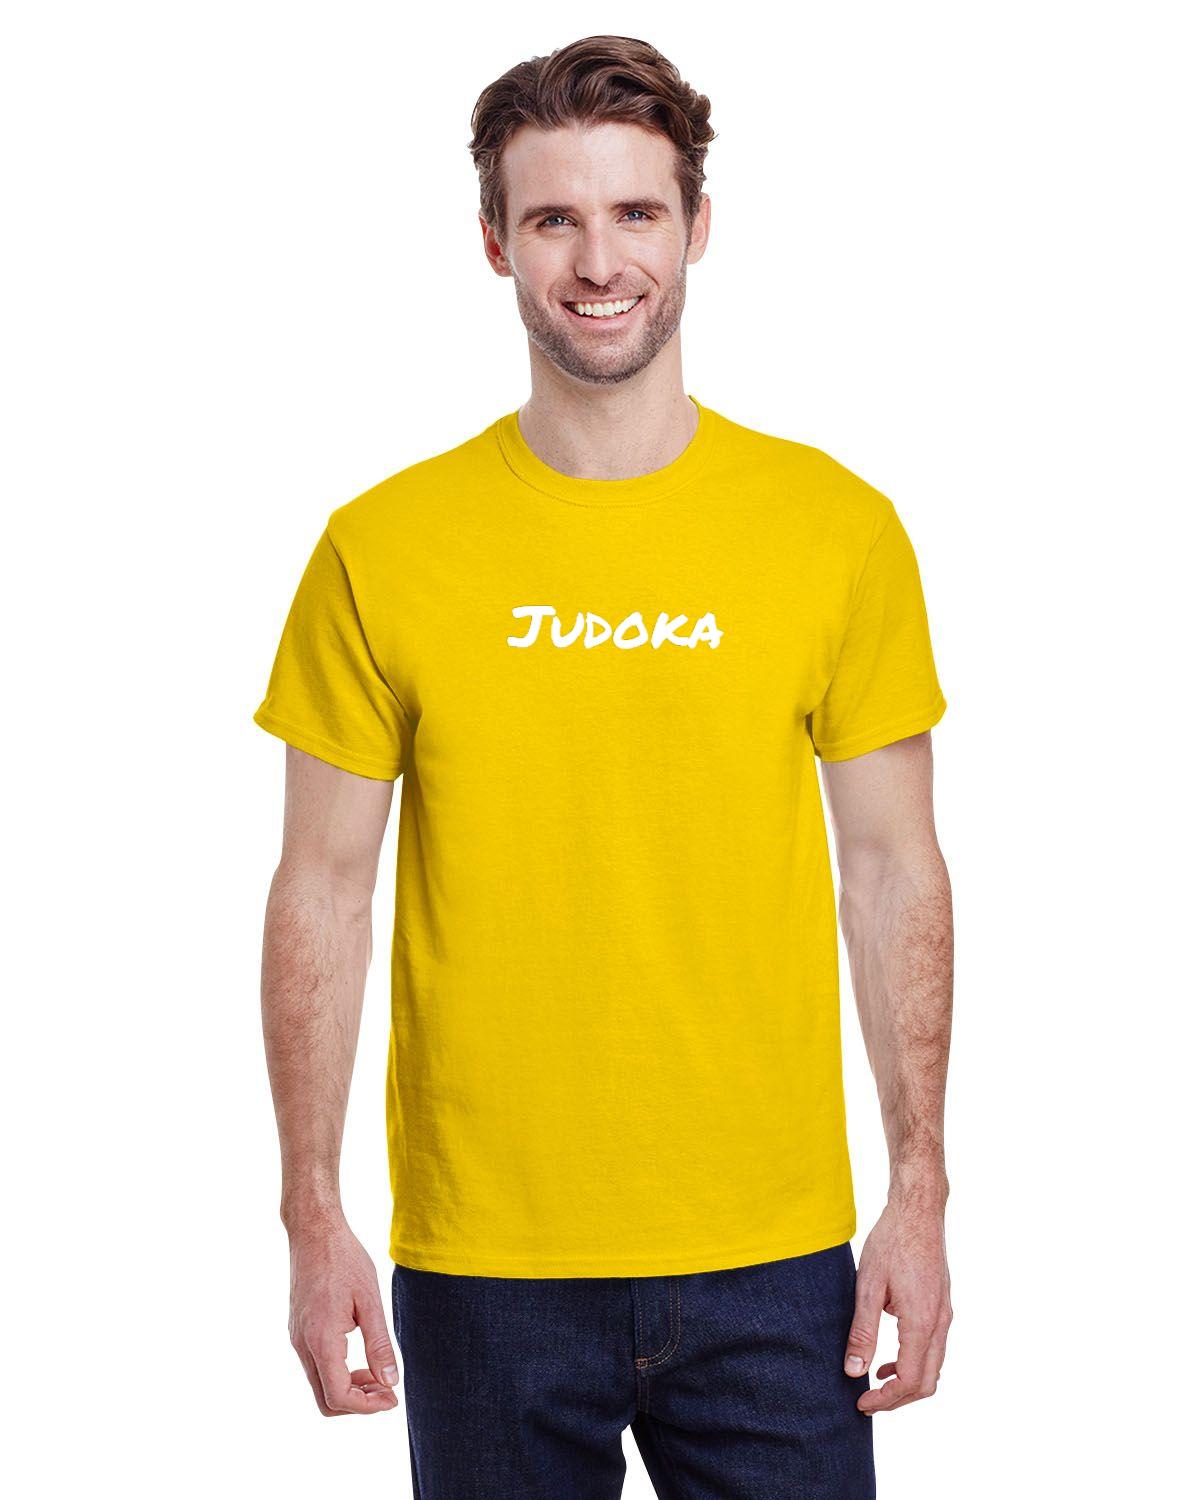 Judoka Mens T-Shirt